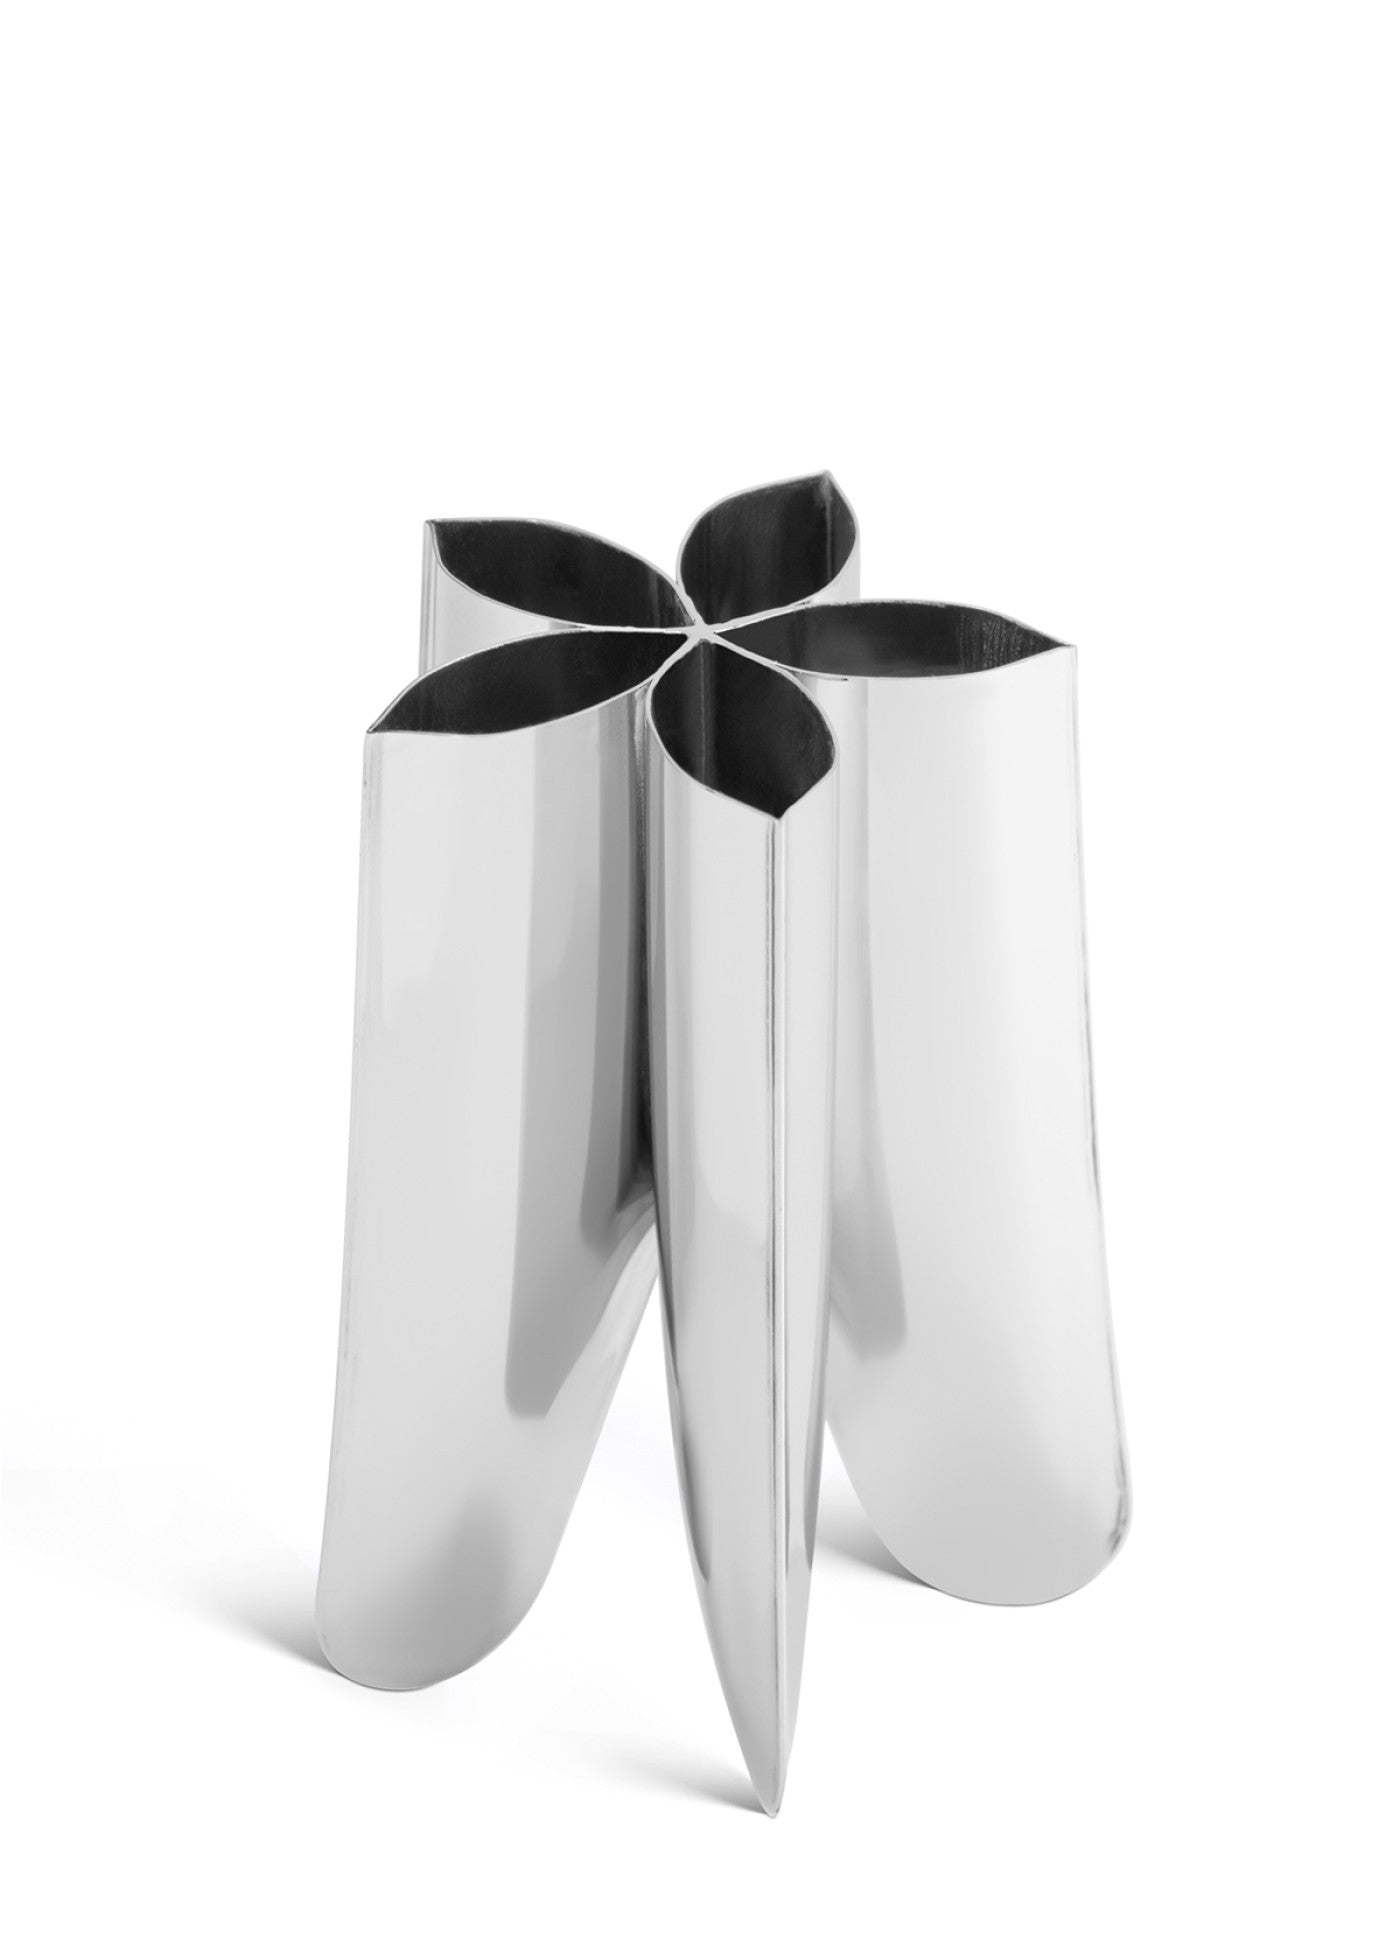 Rotation Vase 20|Accessories|Zieta